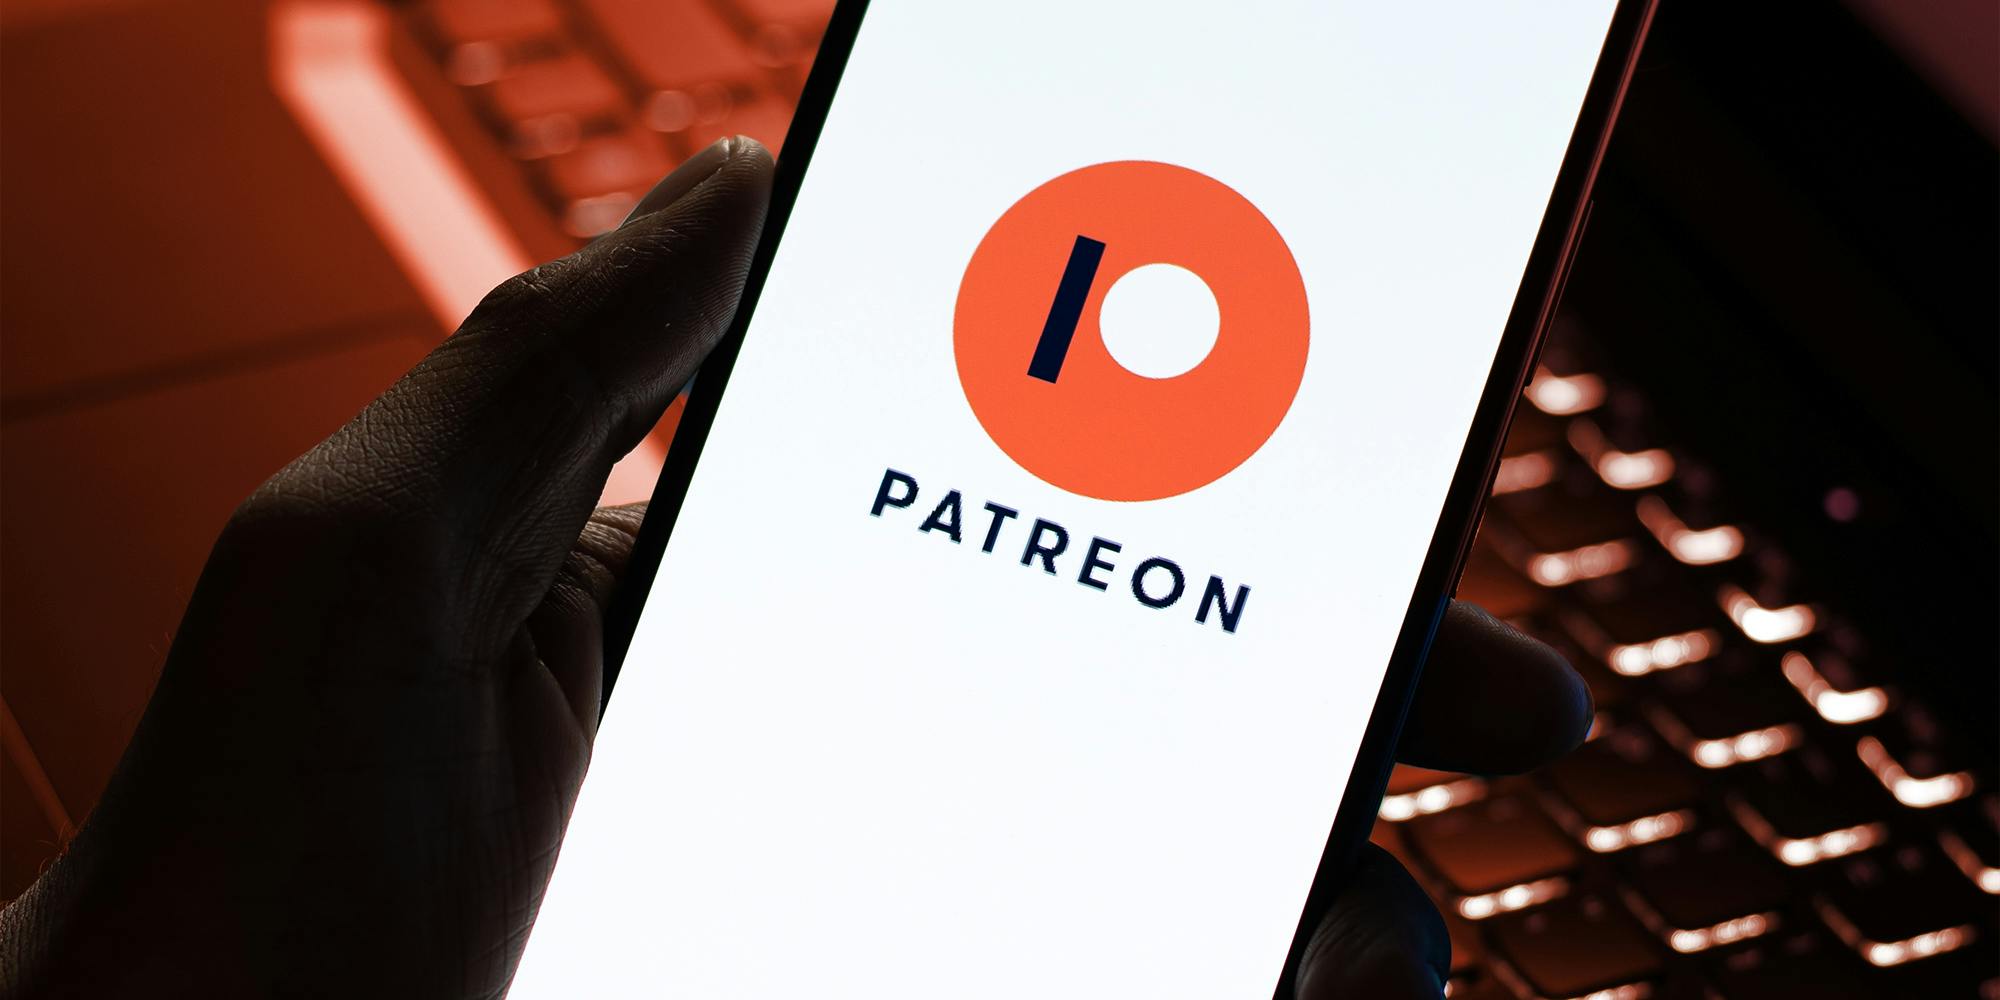 Patreon logo on phone screen